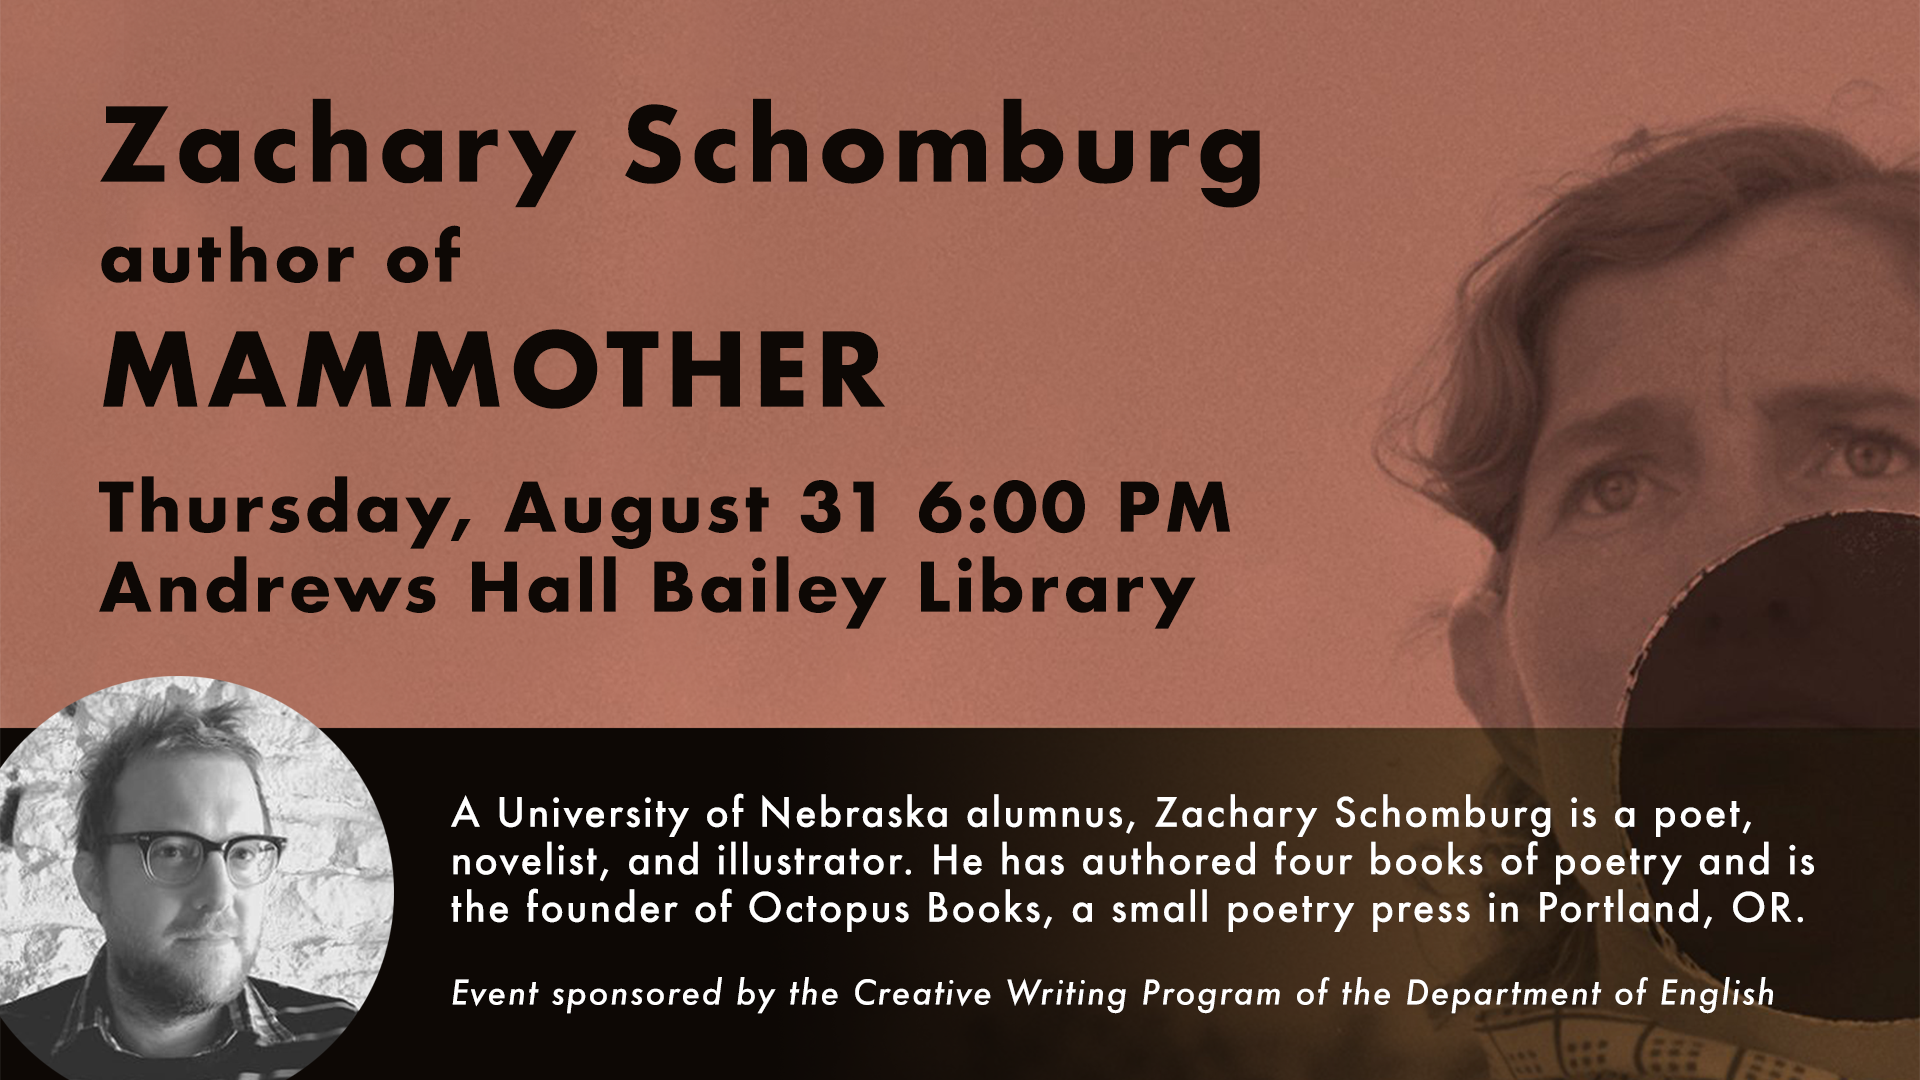 Promotional image for Zachary Schomburg reading